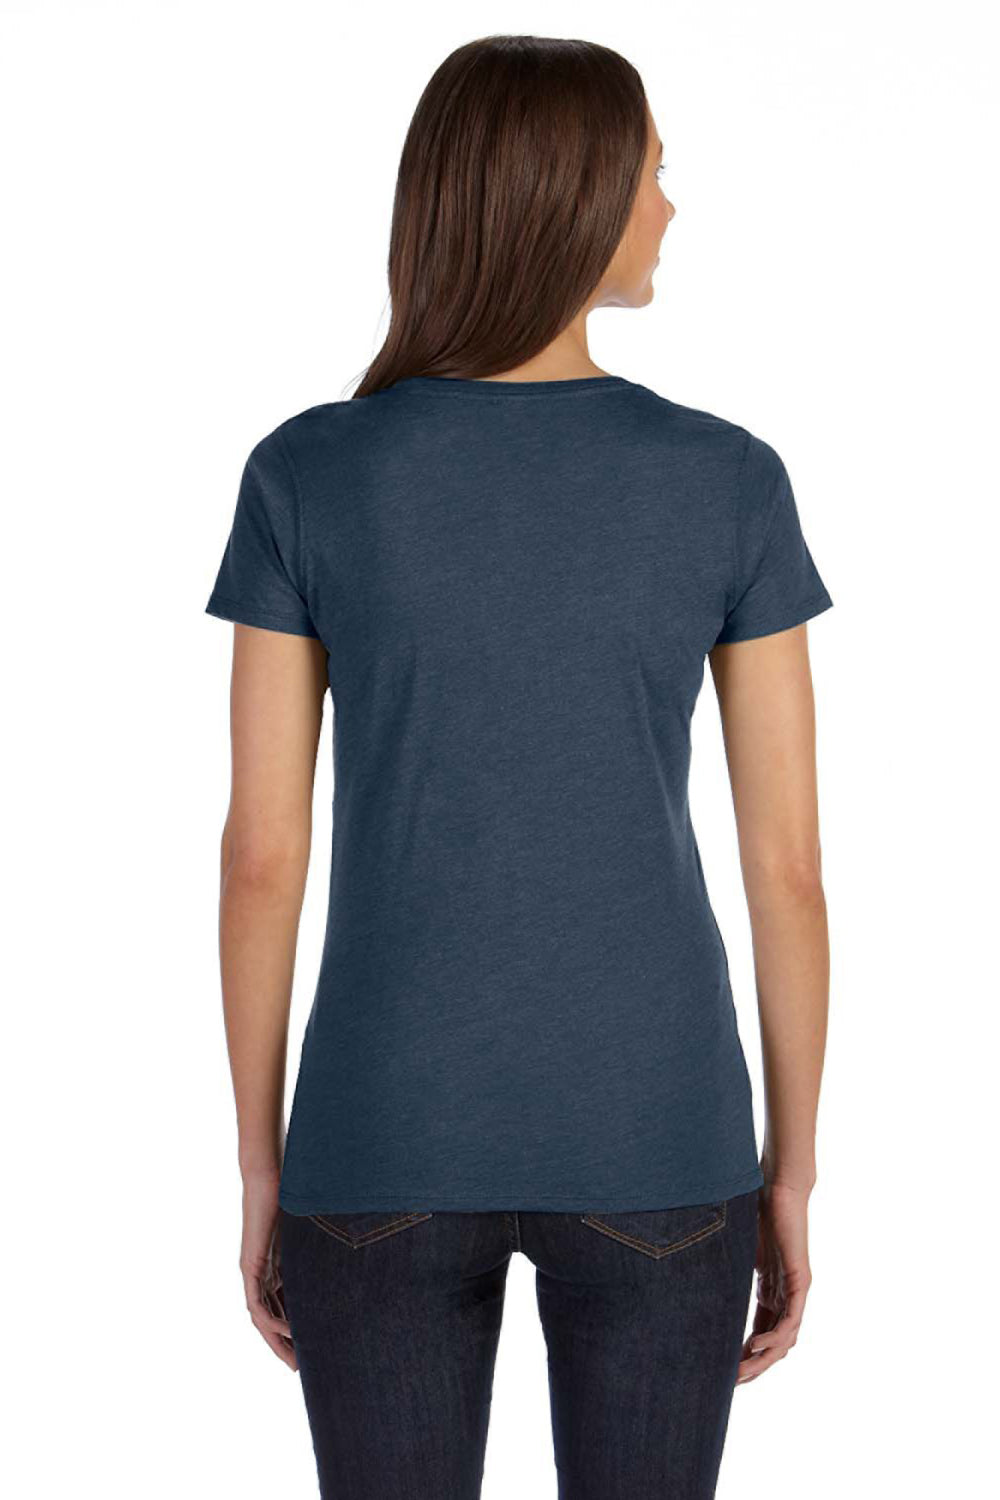 Econscious EC3800 Womens Short Sleeve Crewneck T-Shirt Water Blue Back